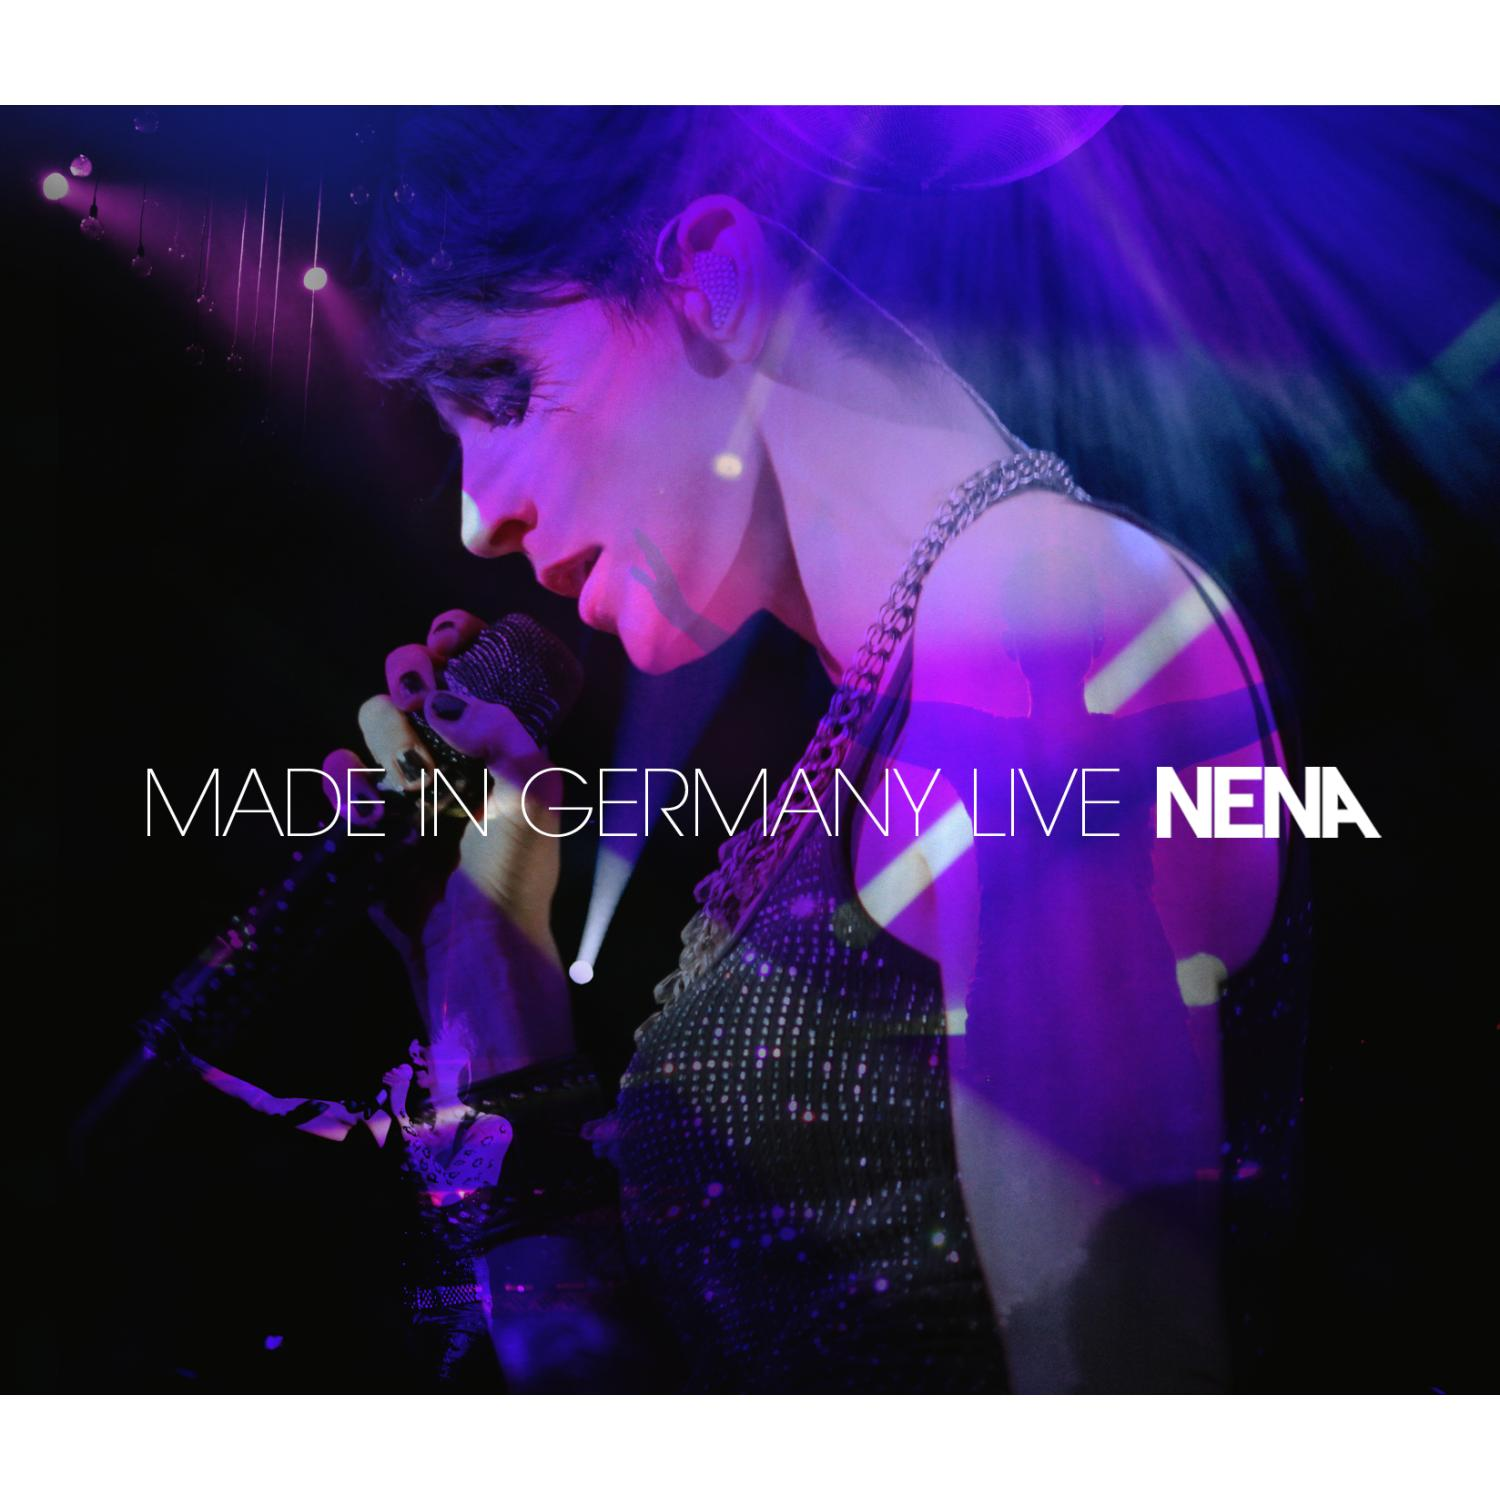 - Live Nena (CD) - - Germany In Made